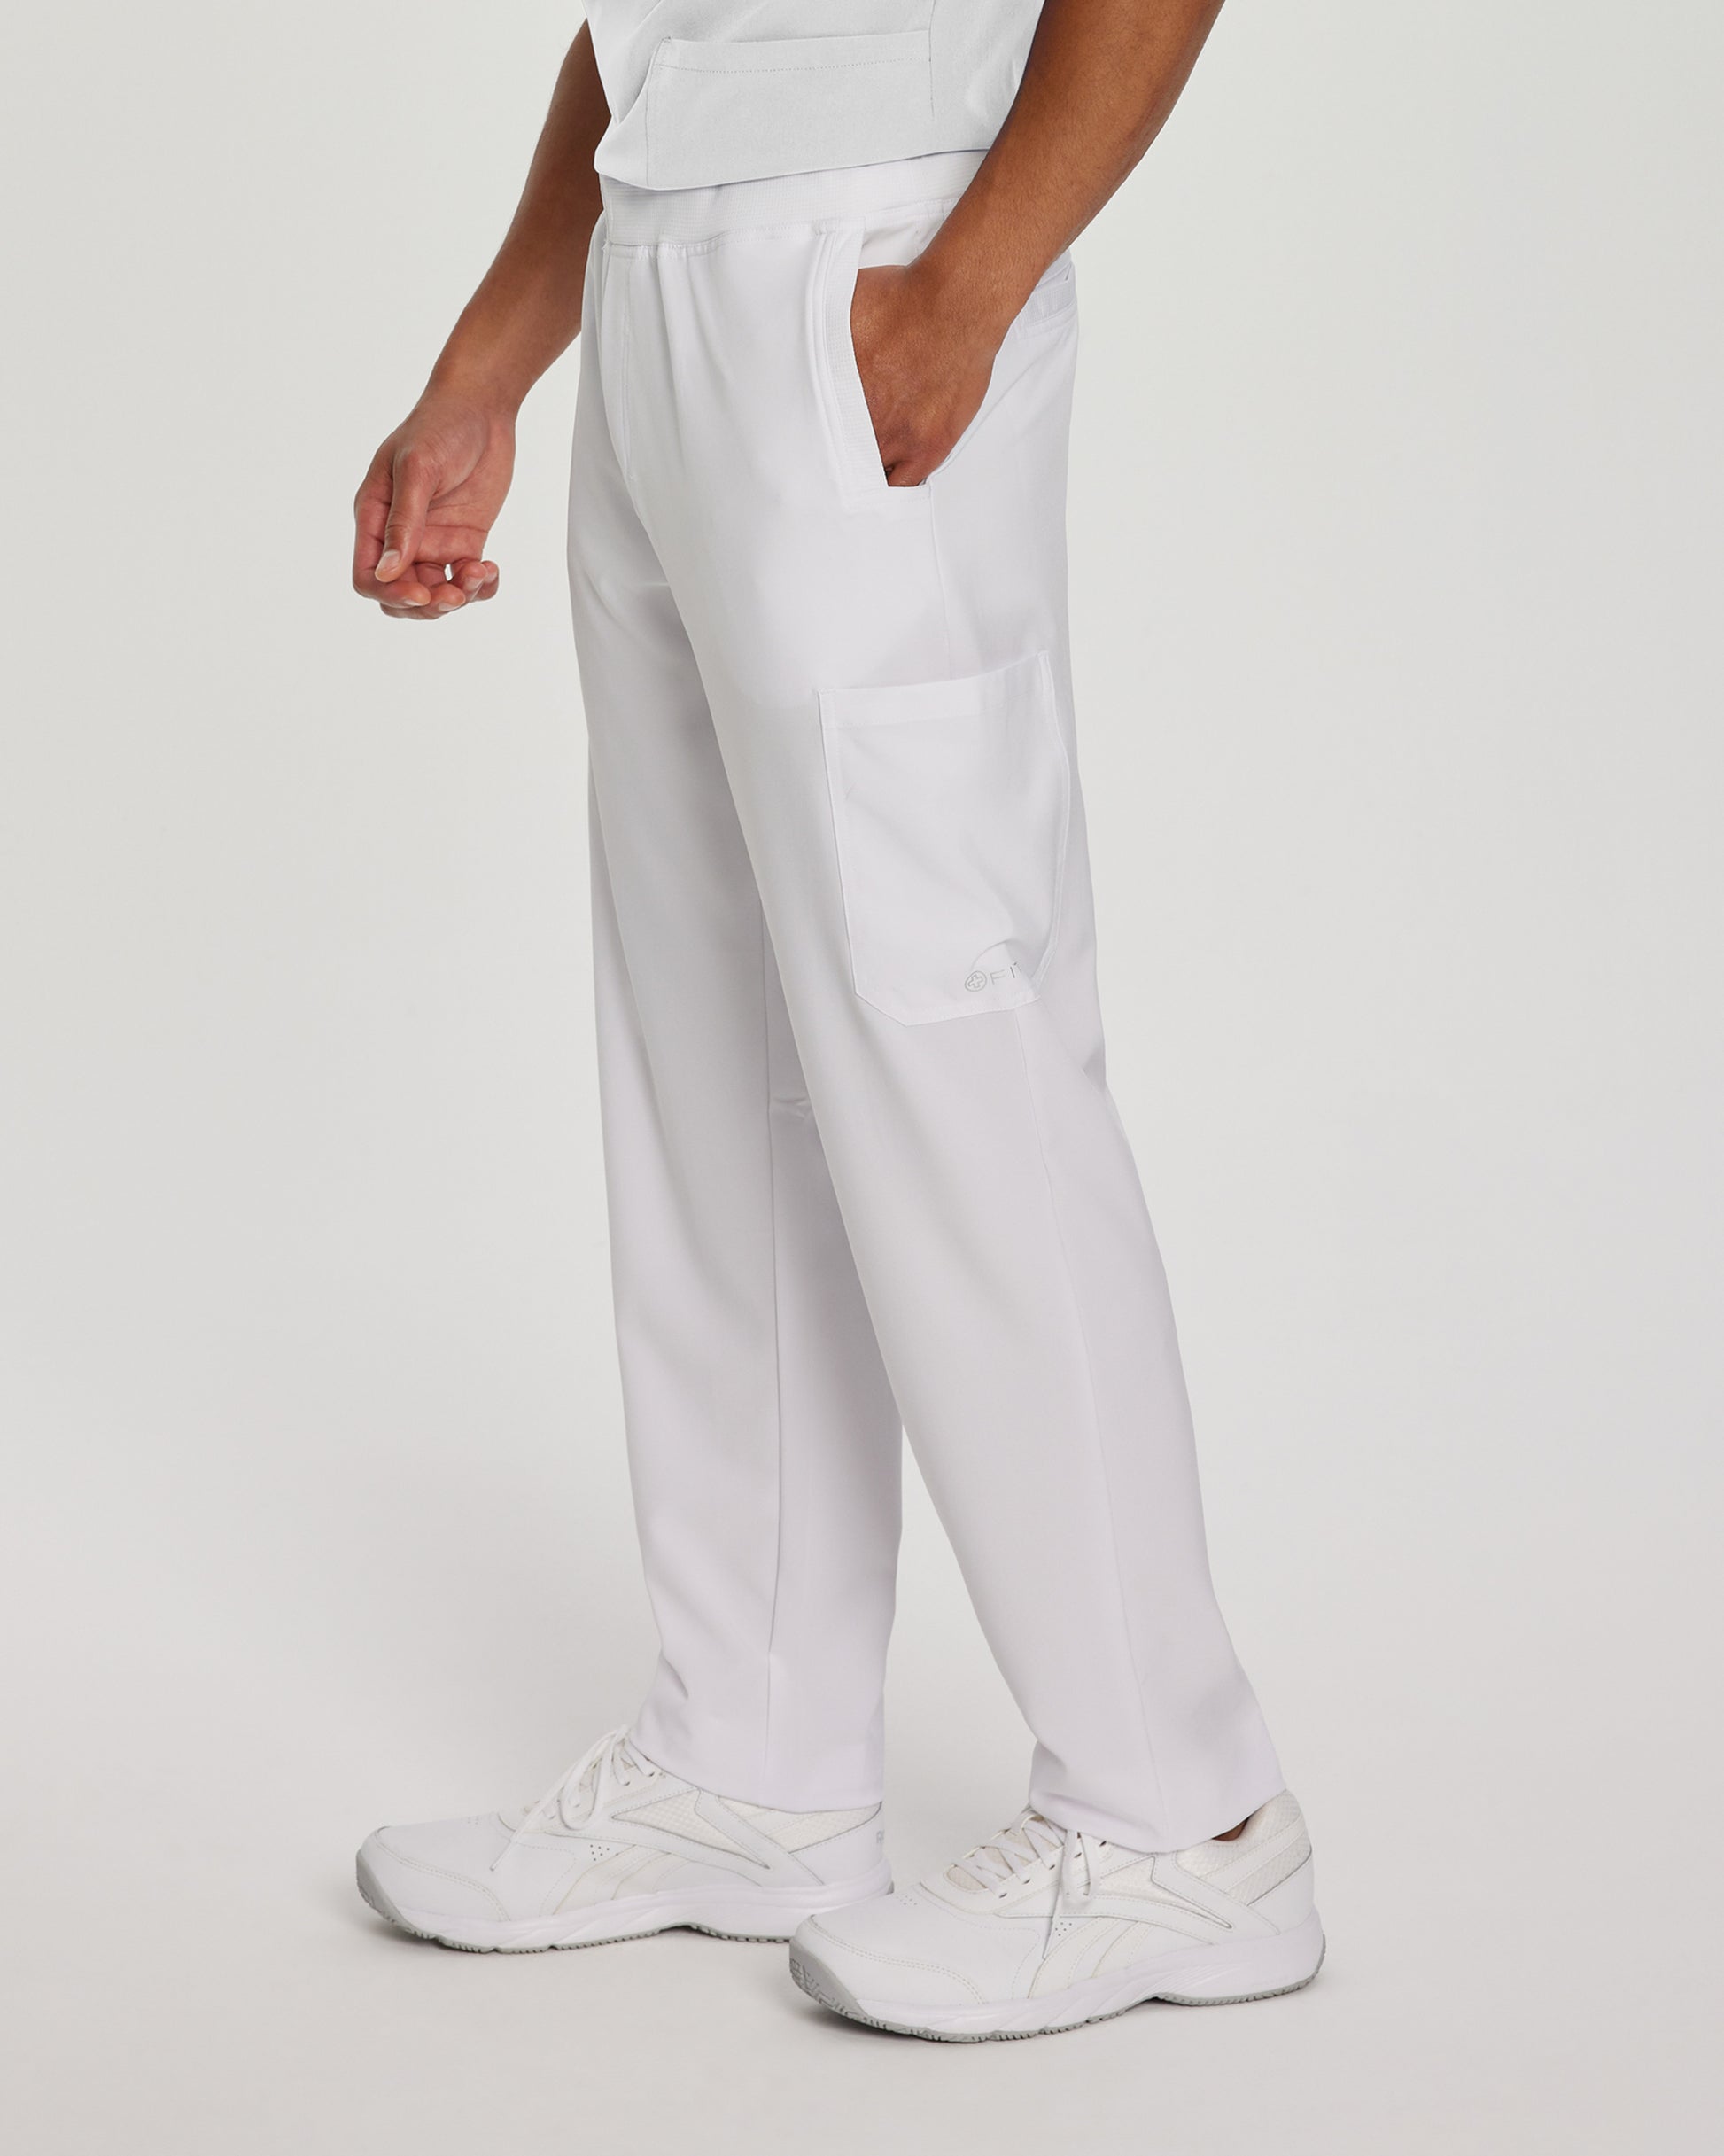 229S Men's FIT White Cross Short Yoga-Style Pant – Scrubs4U